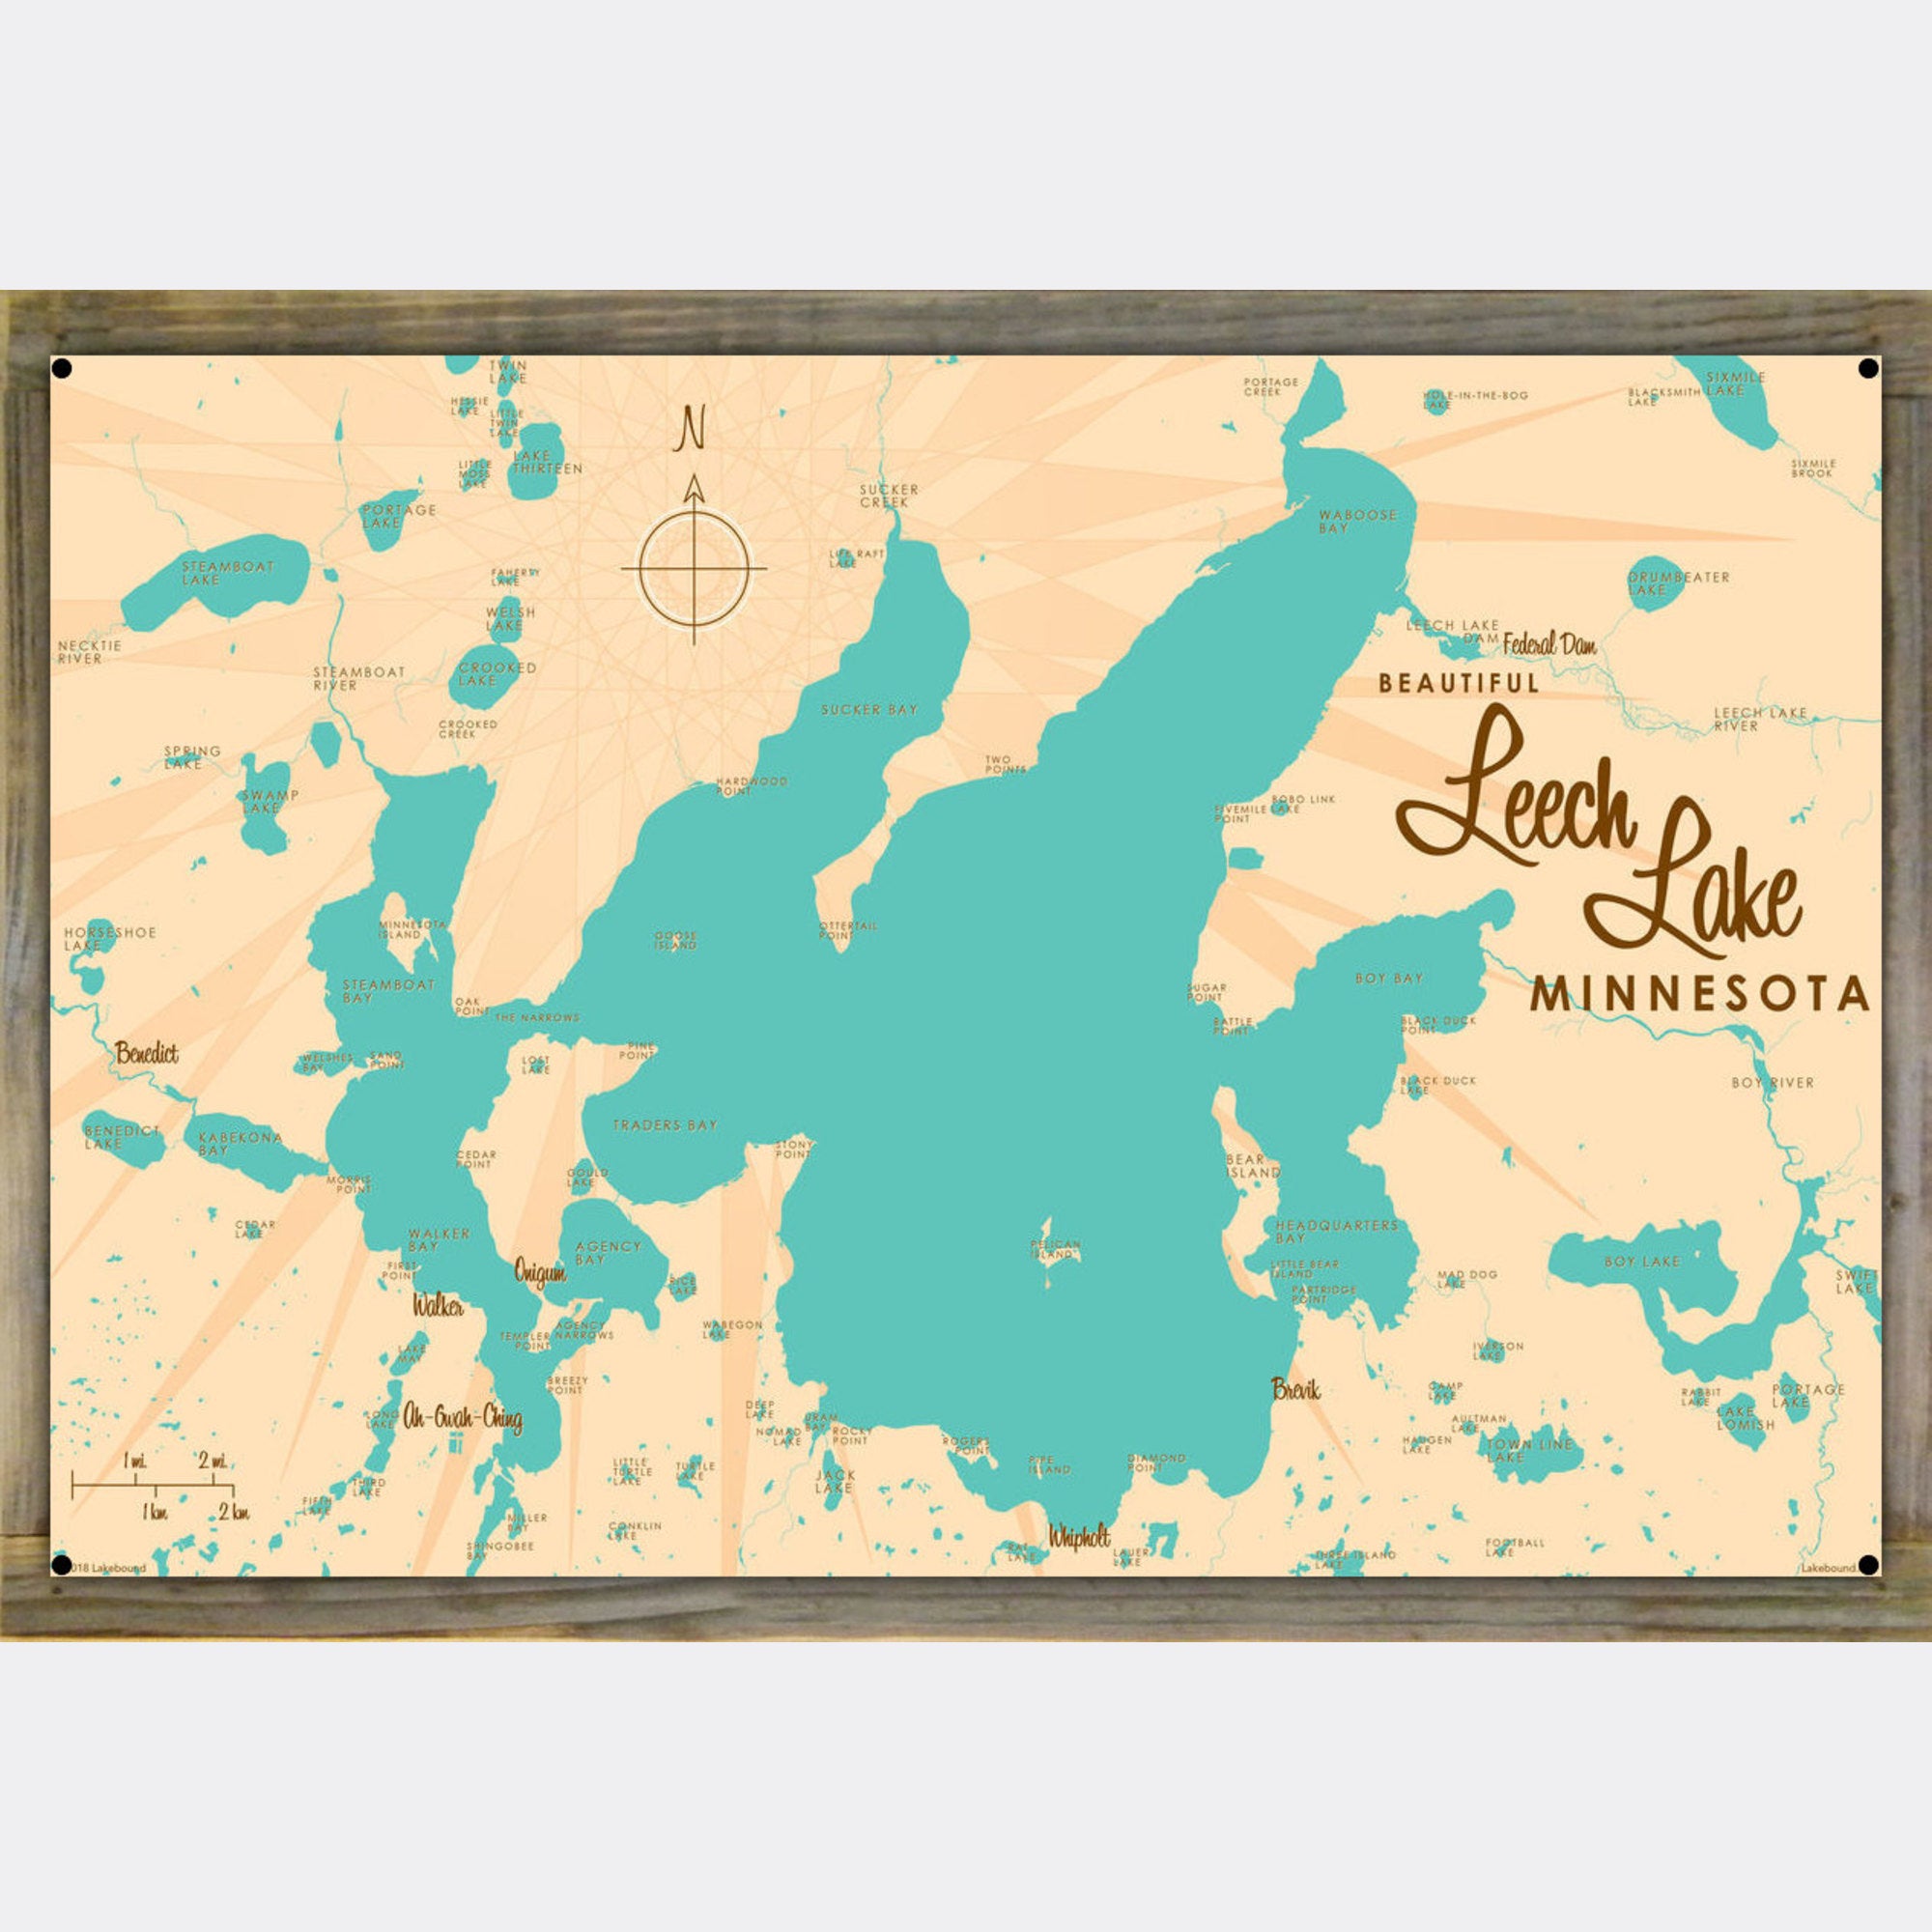 Leech Lake Minnesota, Wood-Mounted Metal Sign Map Art